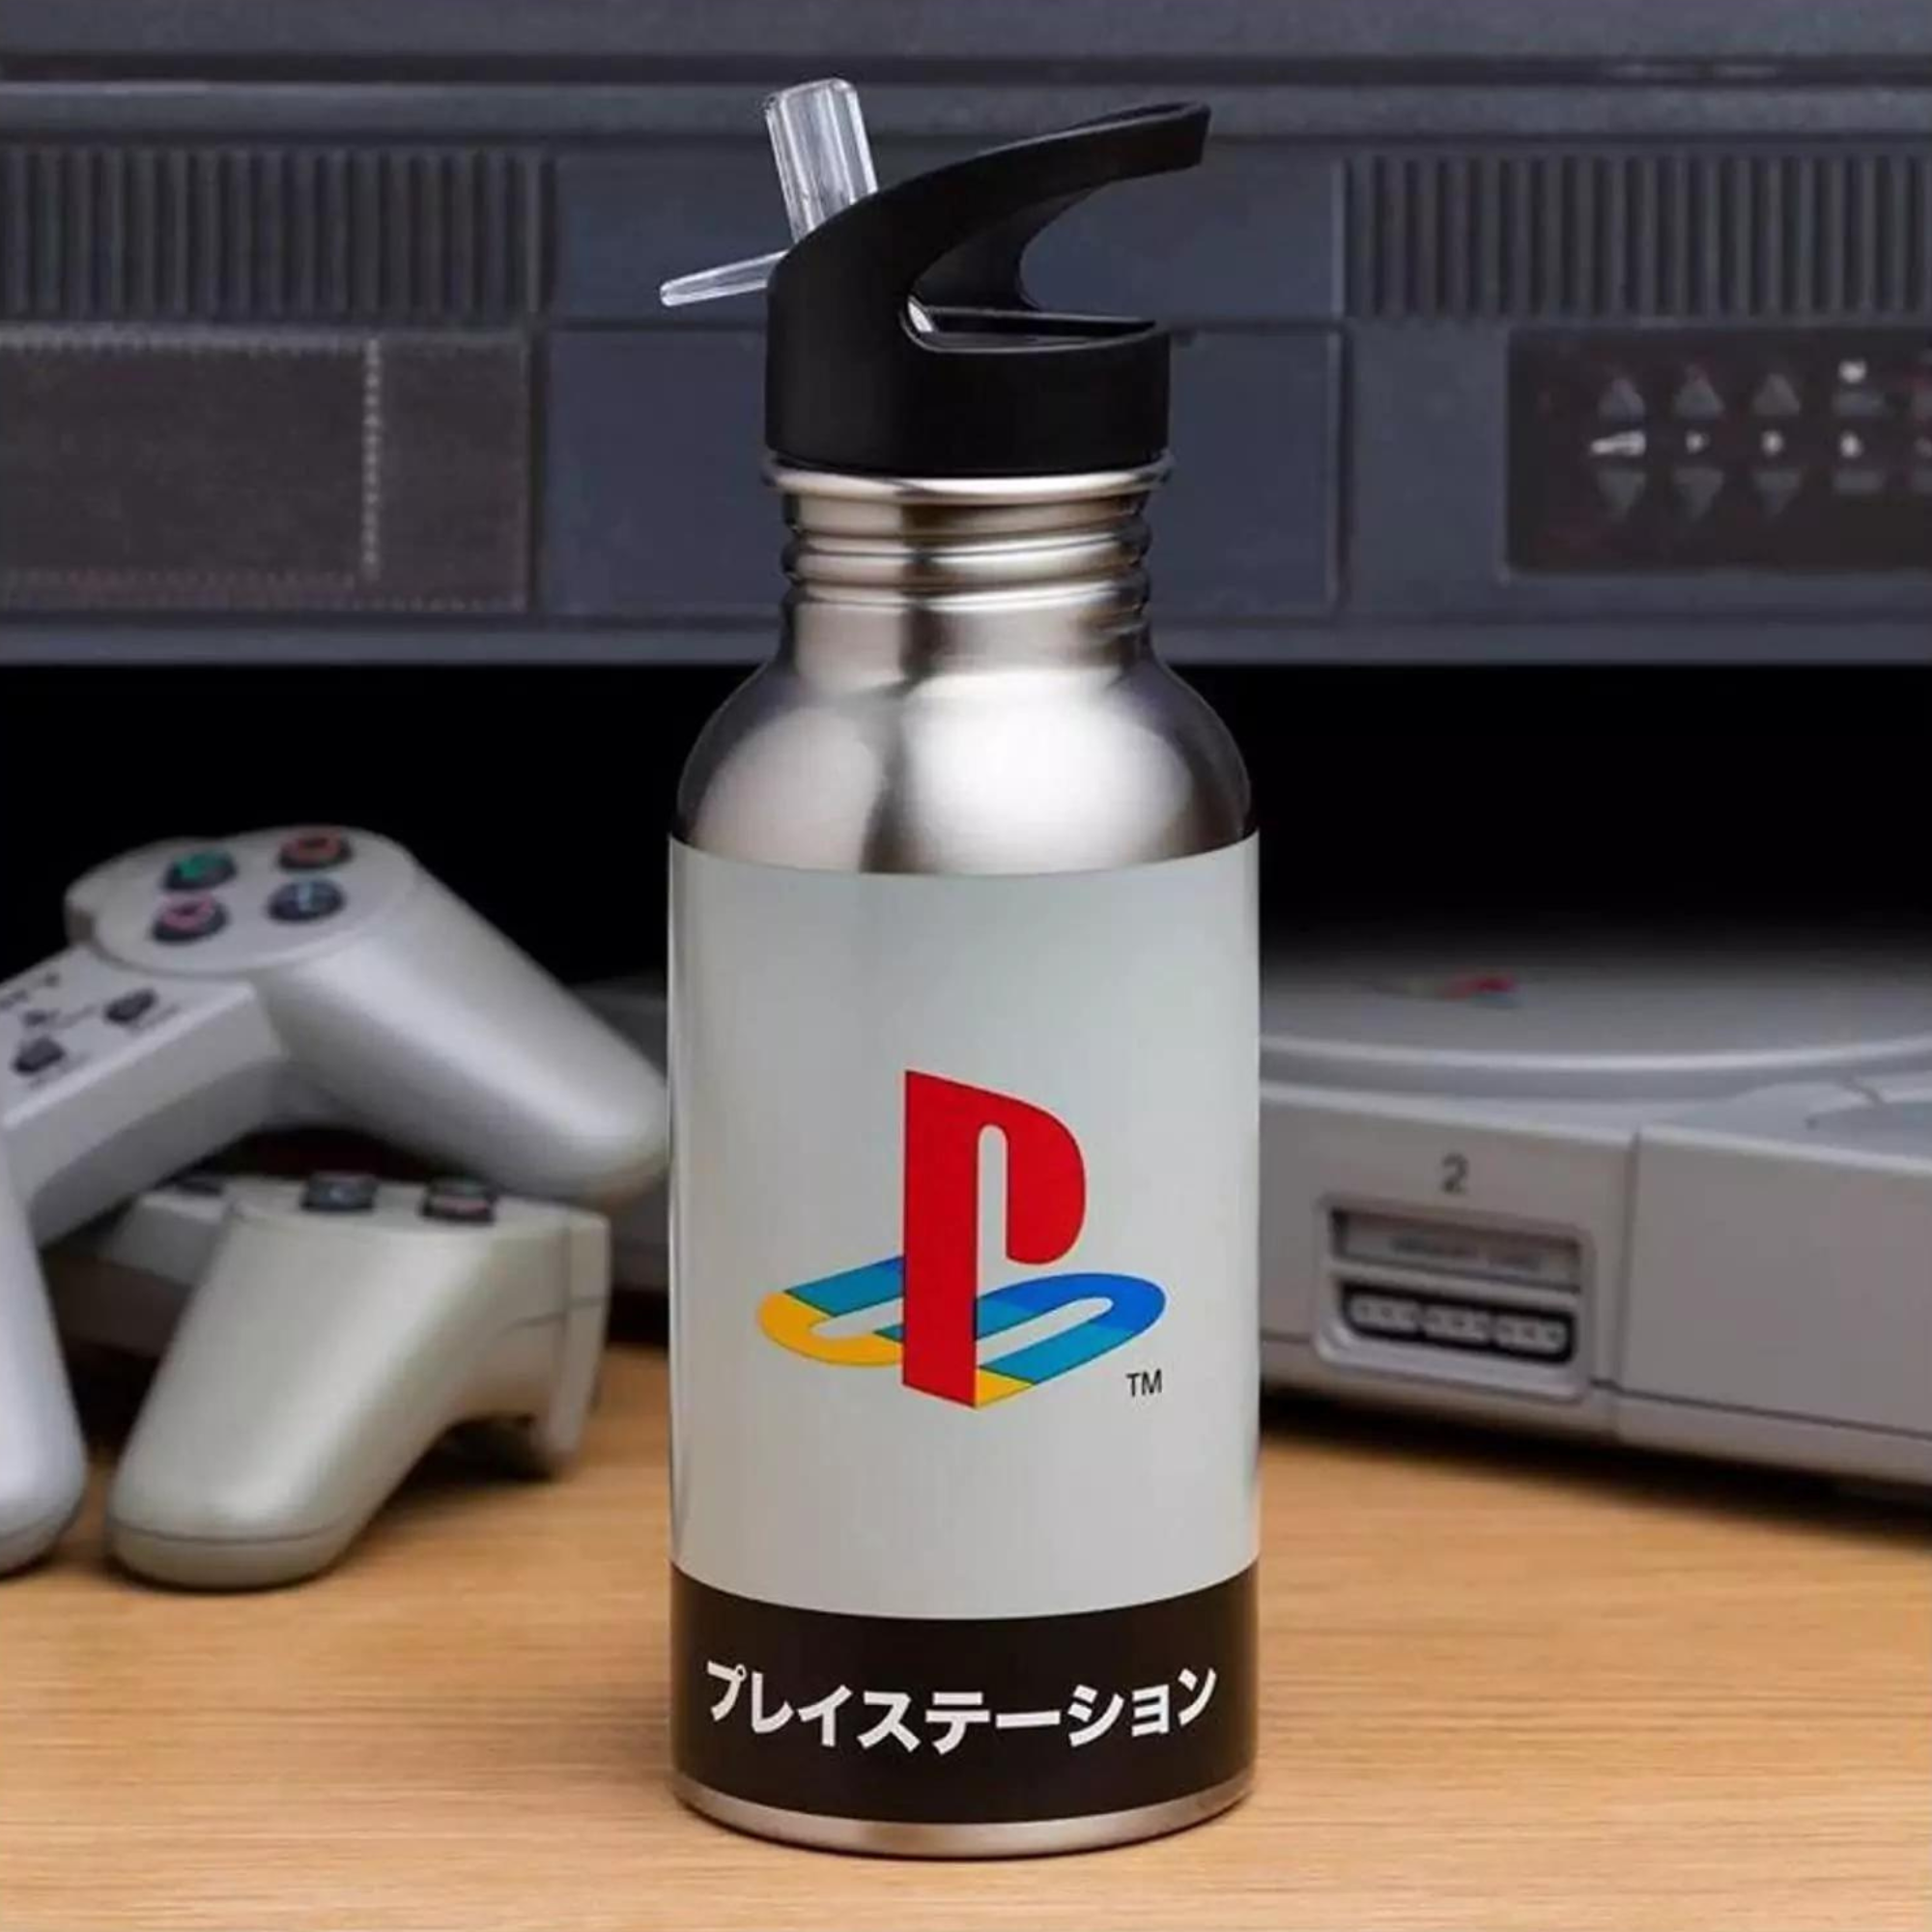 Playstation Classic Logo Design Gift Set - Ceramic Stein & Water Bottle - Toptoys2u